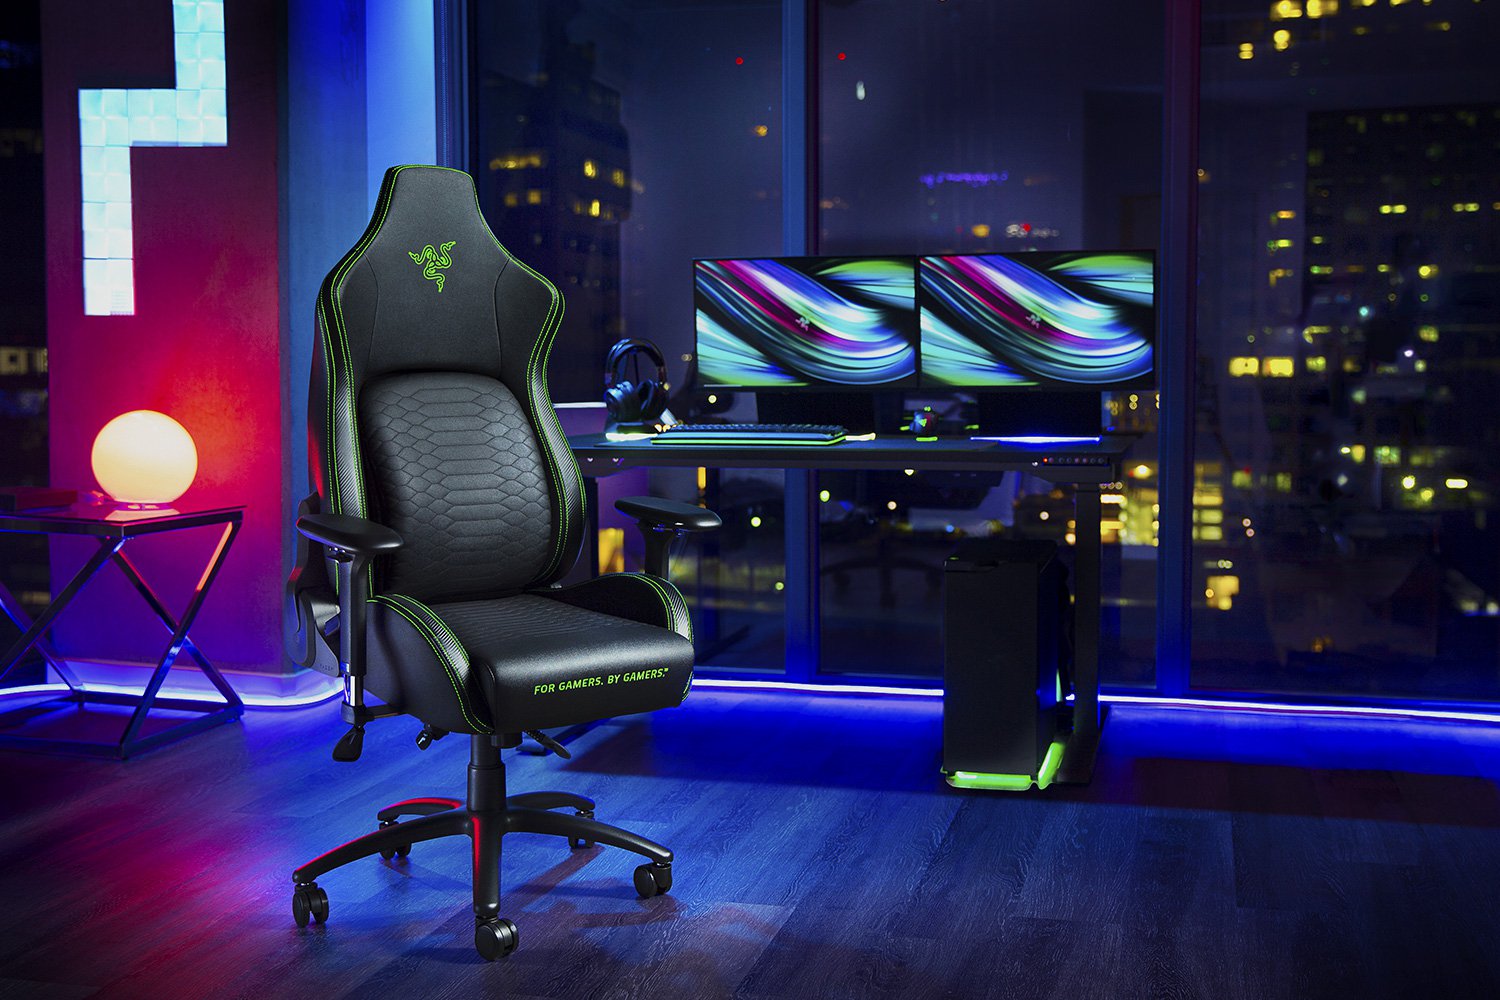 Razer Enki - black/green Chaise de gaming – acheter chez